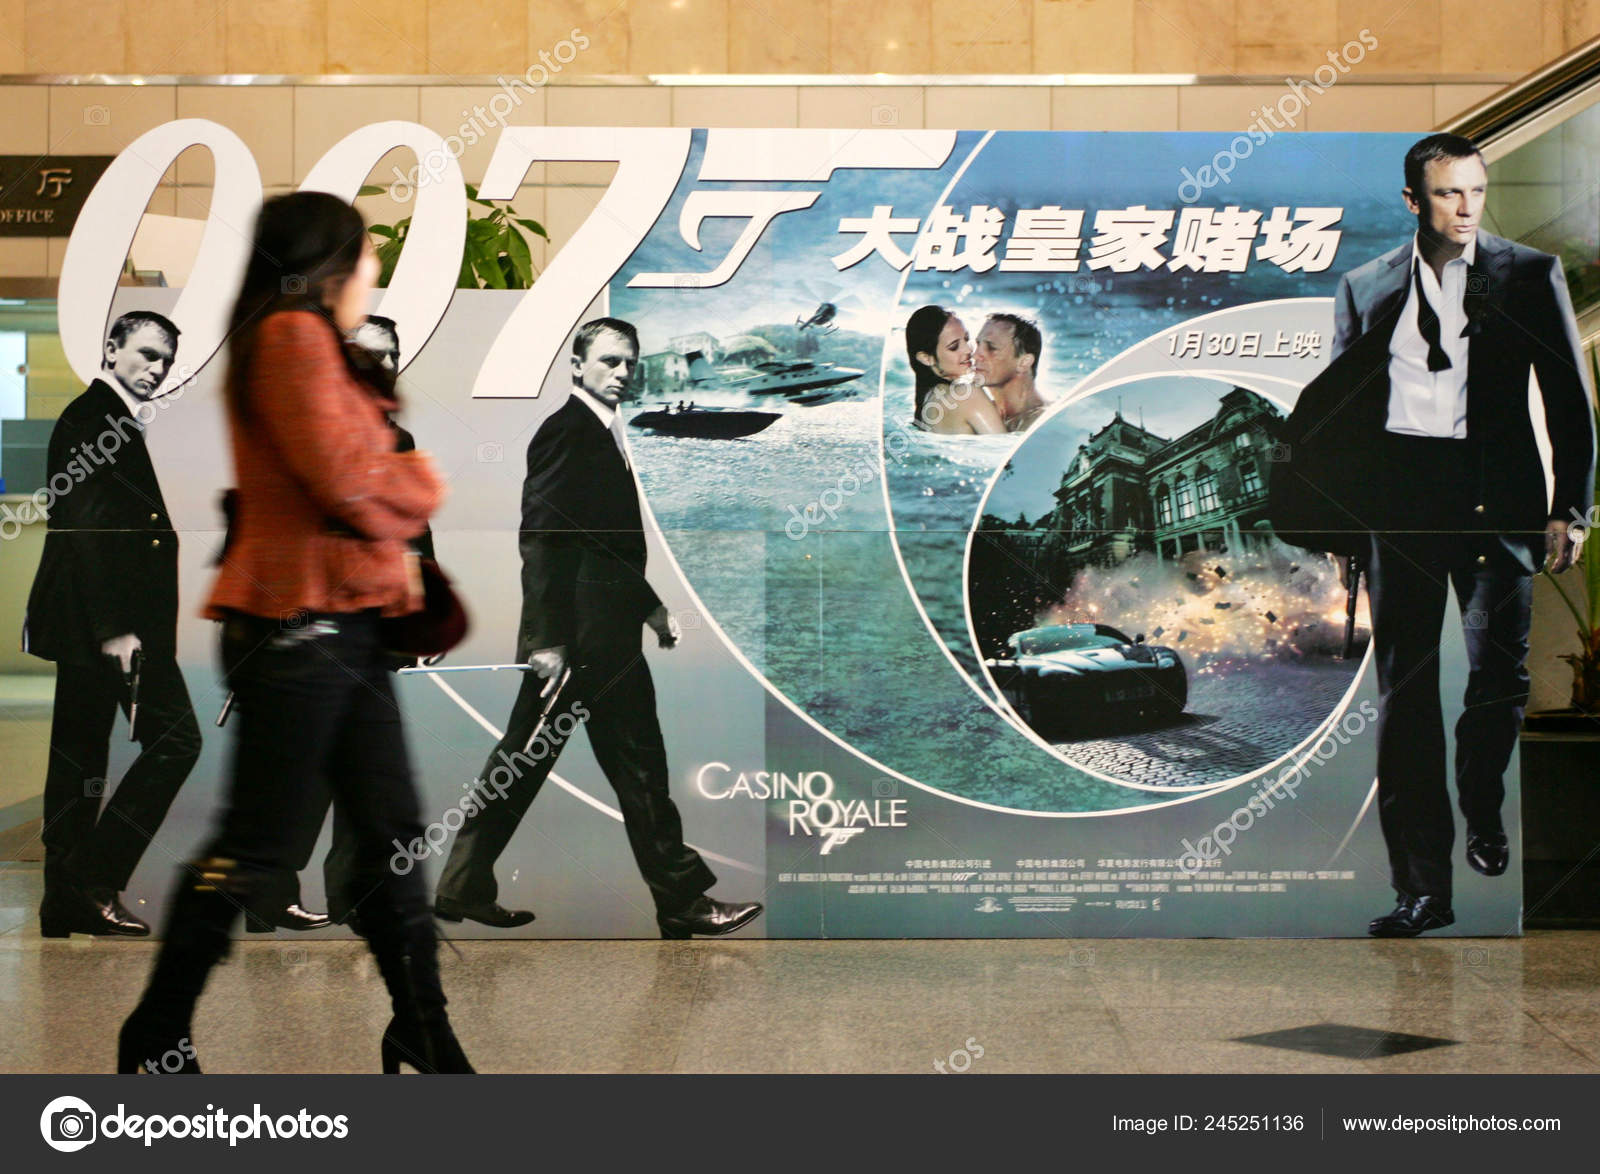 depositphotos_245251136-stock-photo-chinese-woman-walks-advertising-poster.jpg